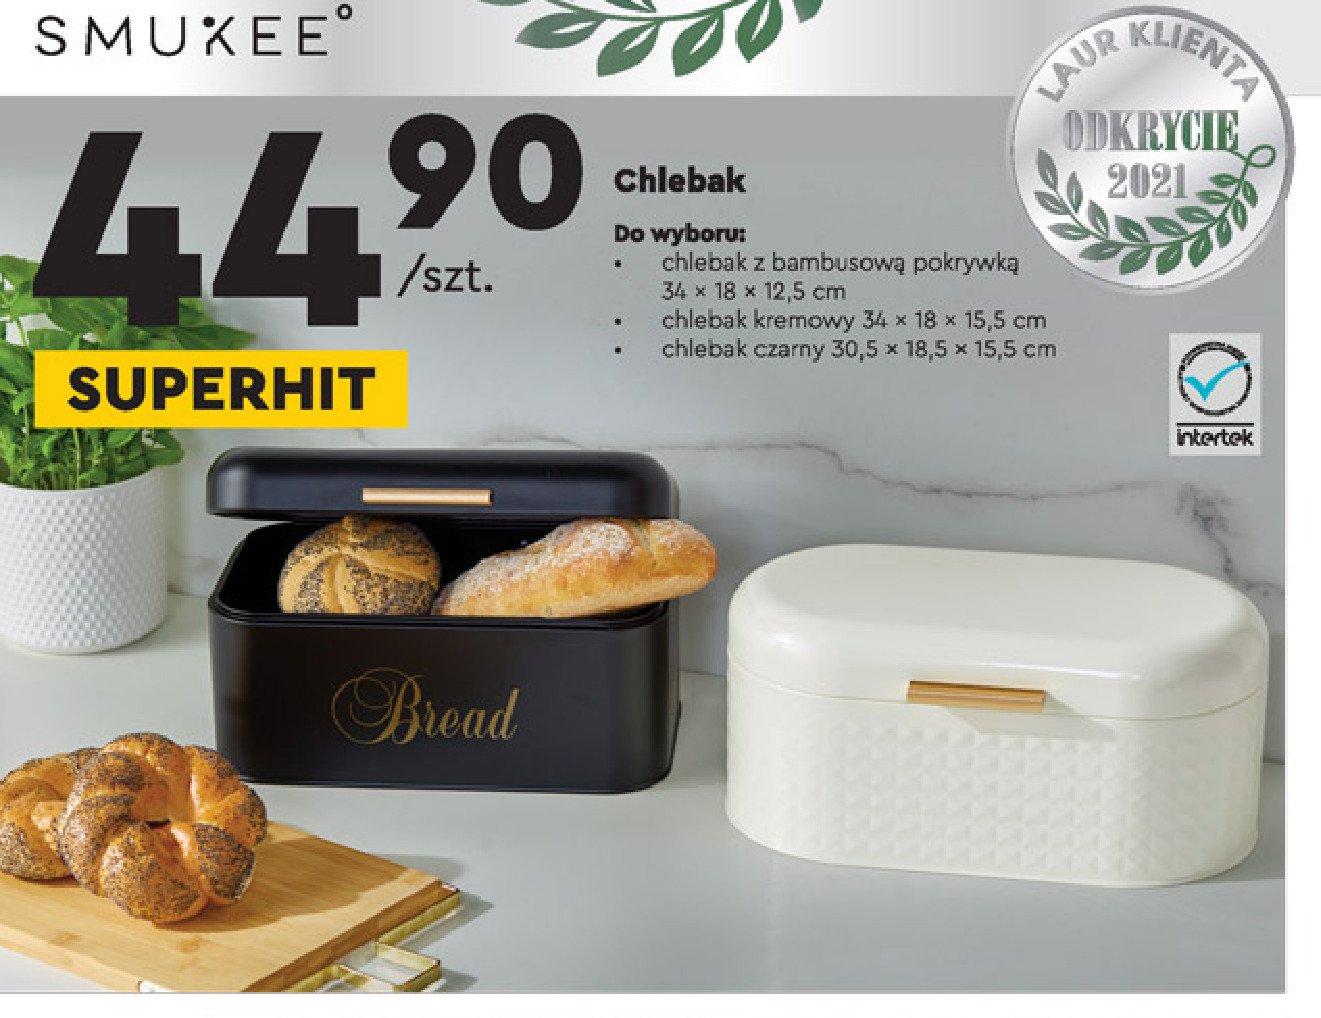 Chlebak kremowy 34 x 18 x 15.5 cm Smukee kitchen promocja